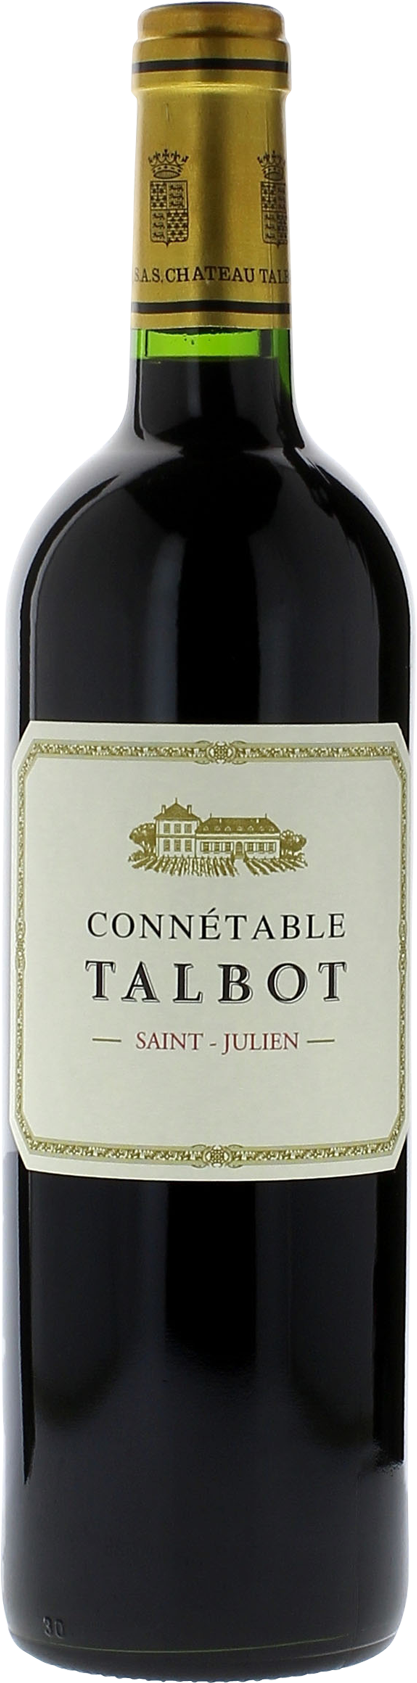 Connetable Talbot 2019 6 per case